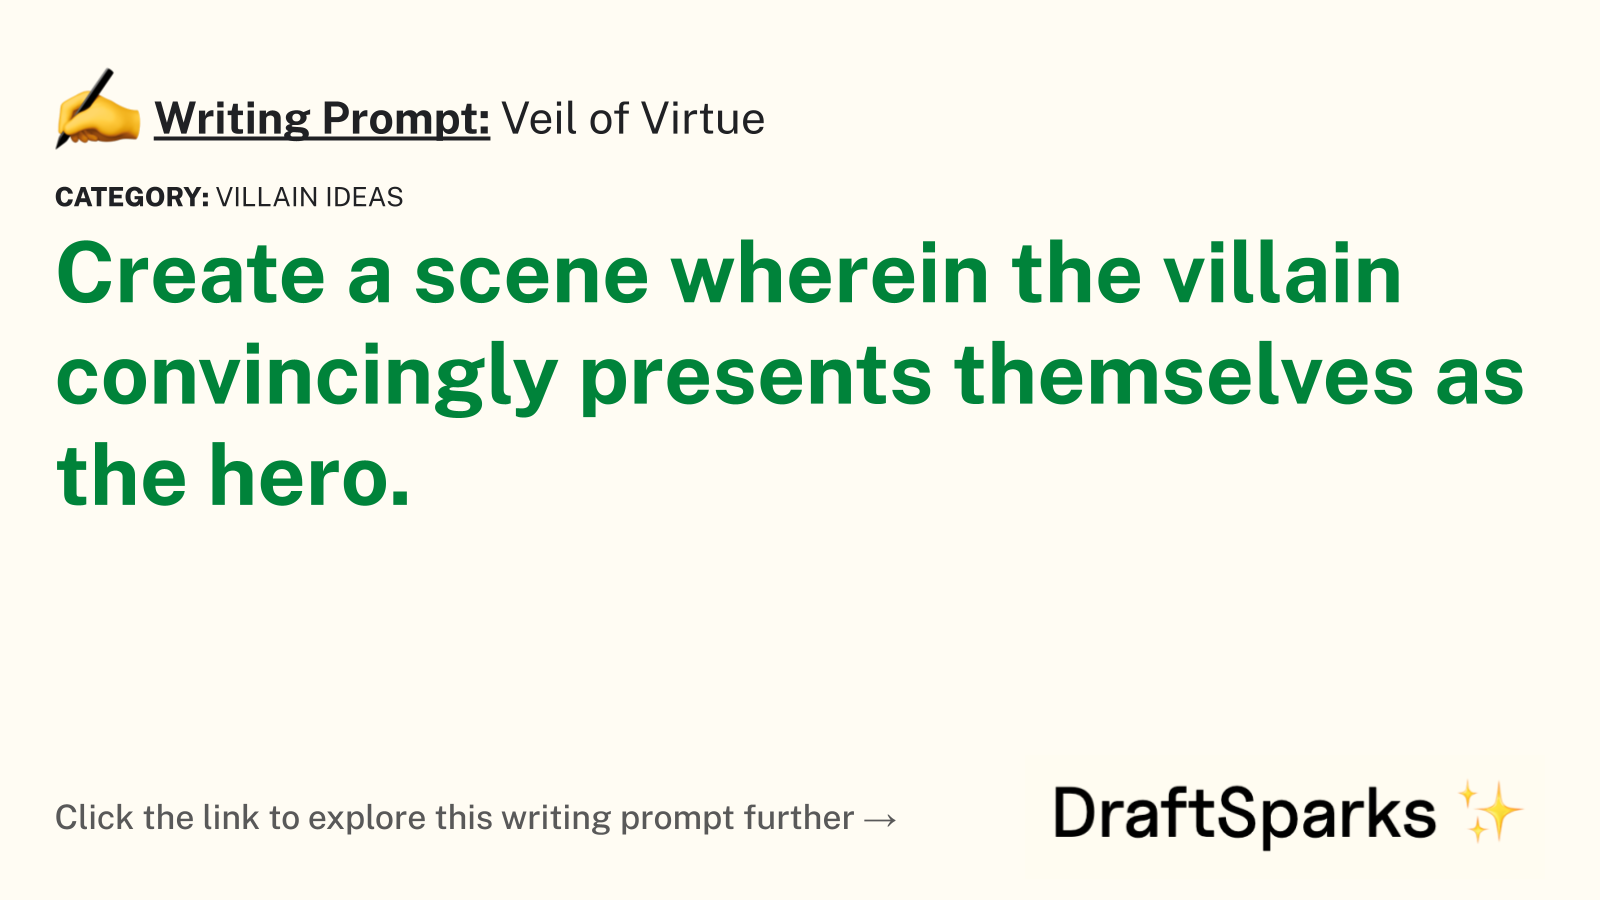 Veil of Virtue